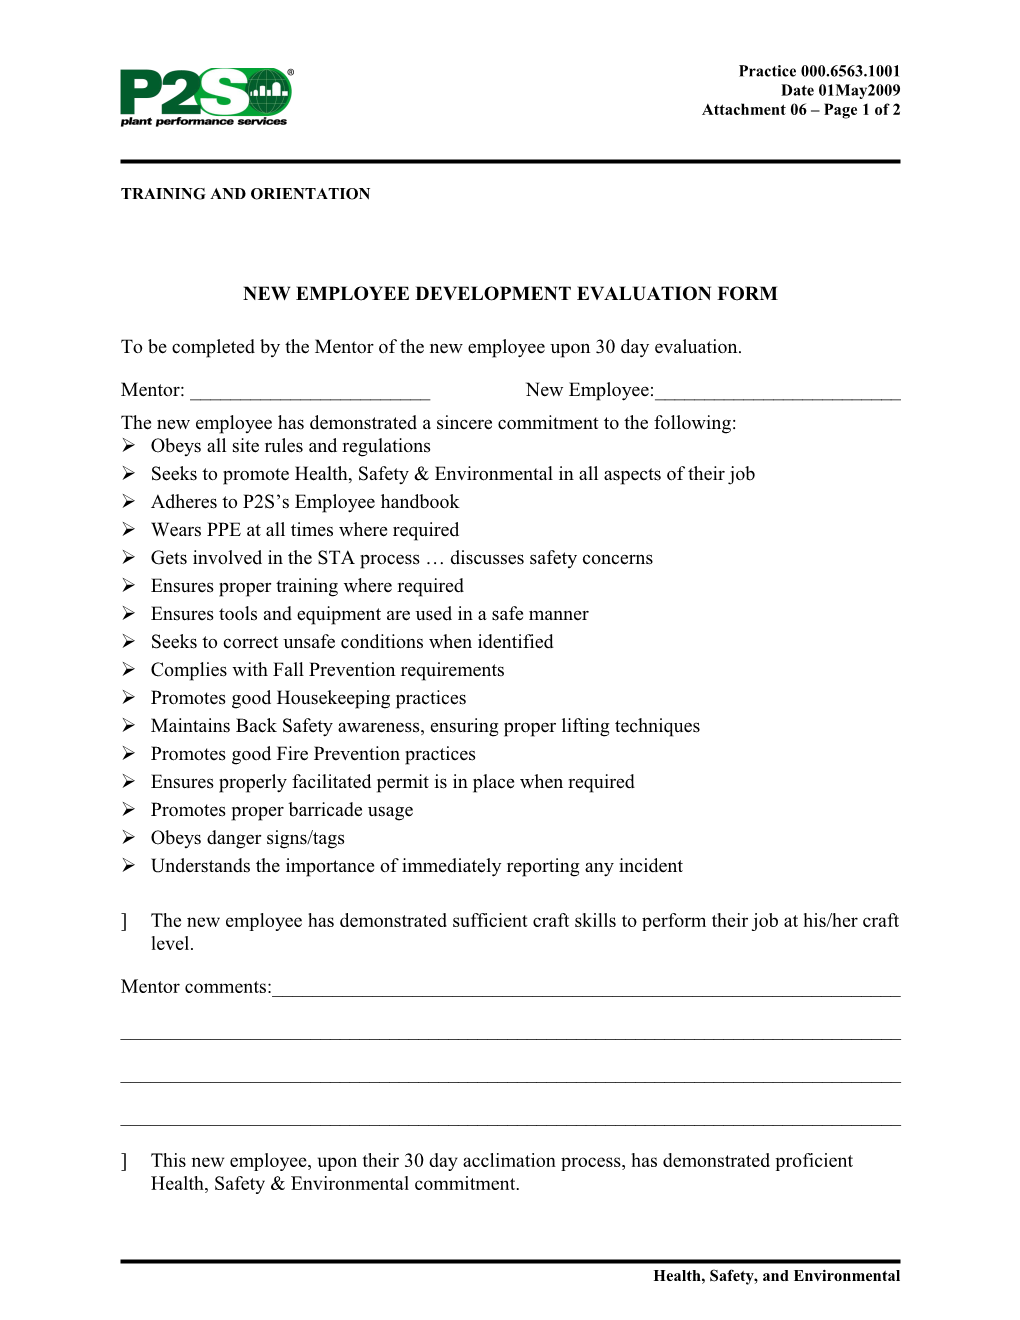 New Employee Development Evaluation Form